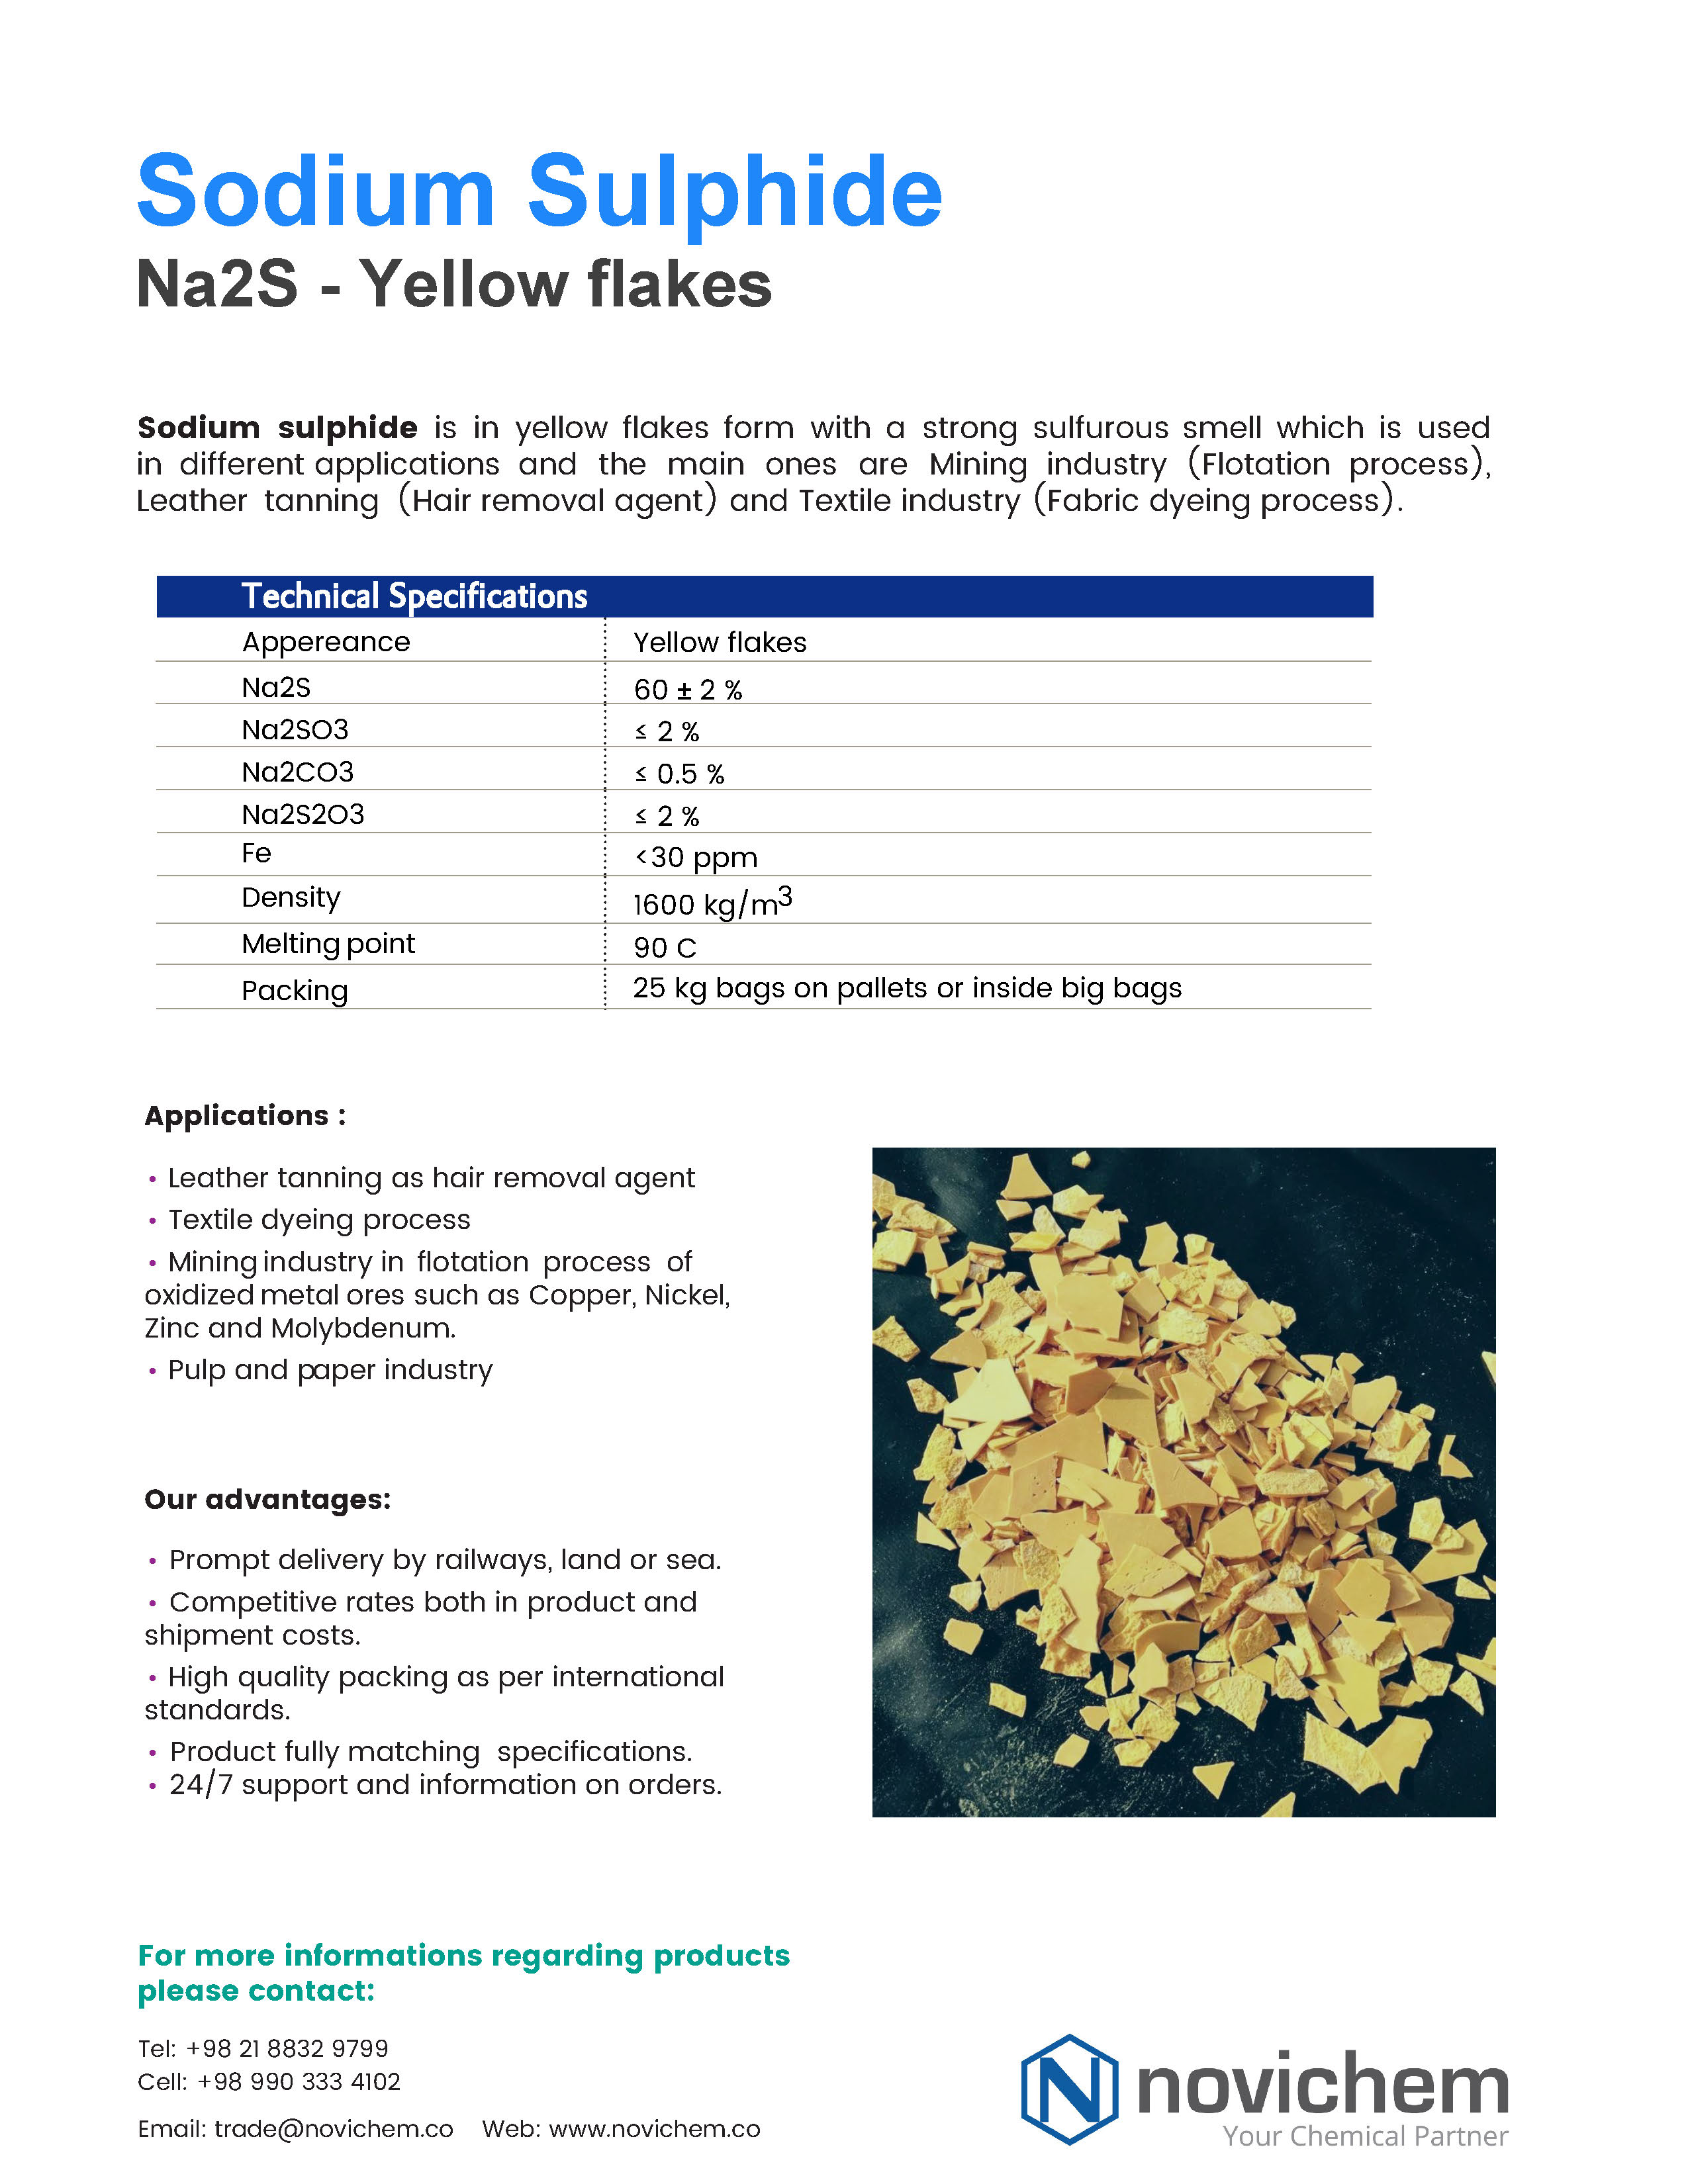 Sodium Sulphide (Yellow flakes) - Iran